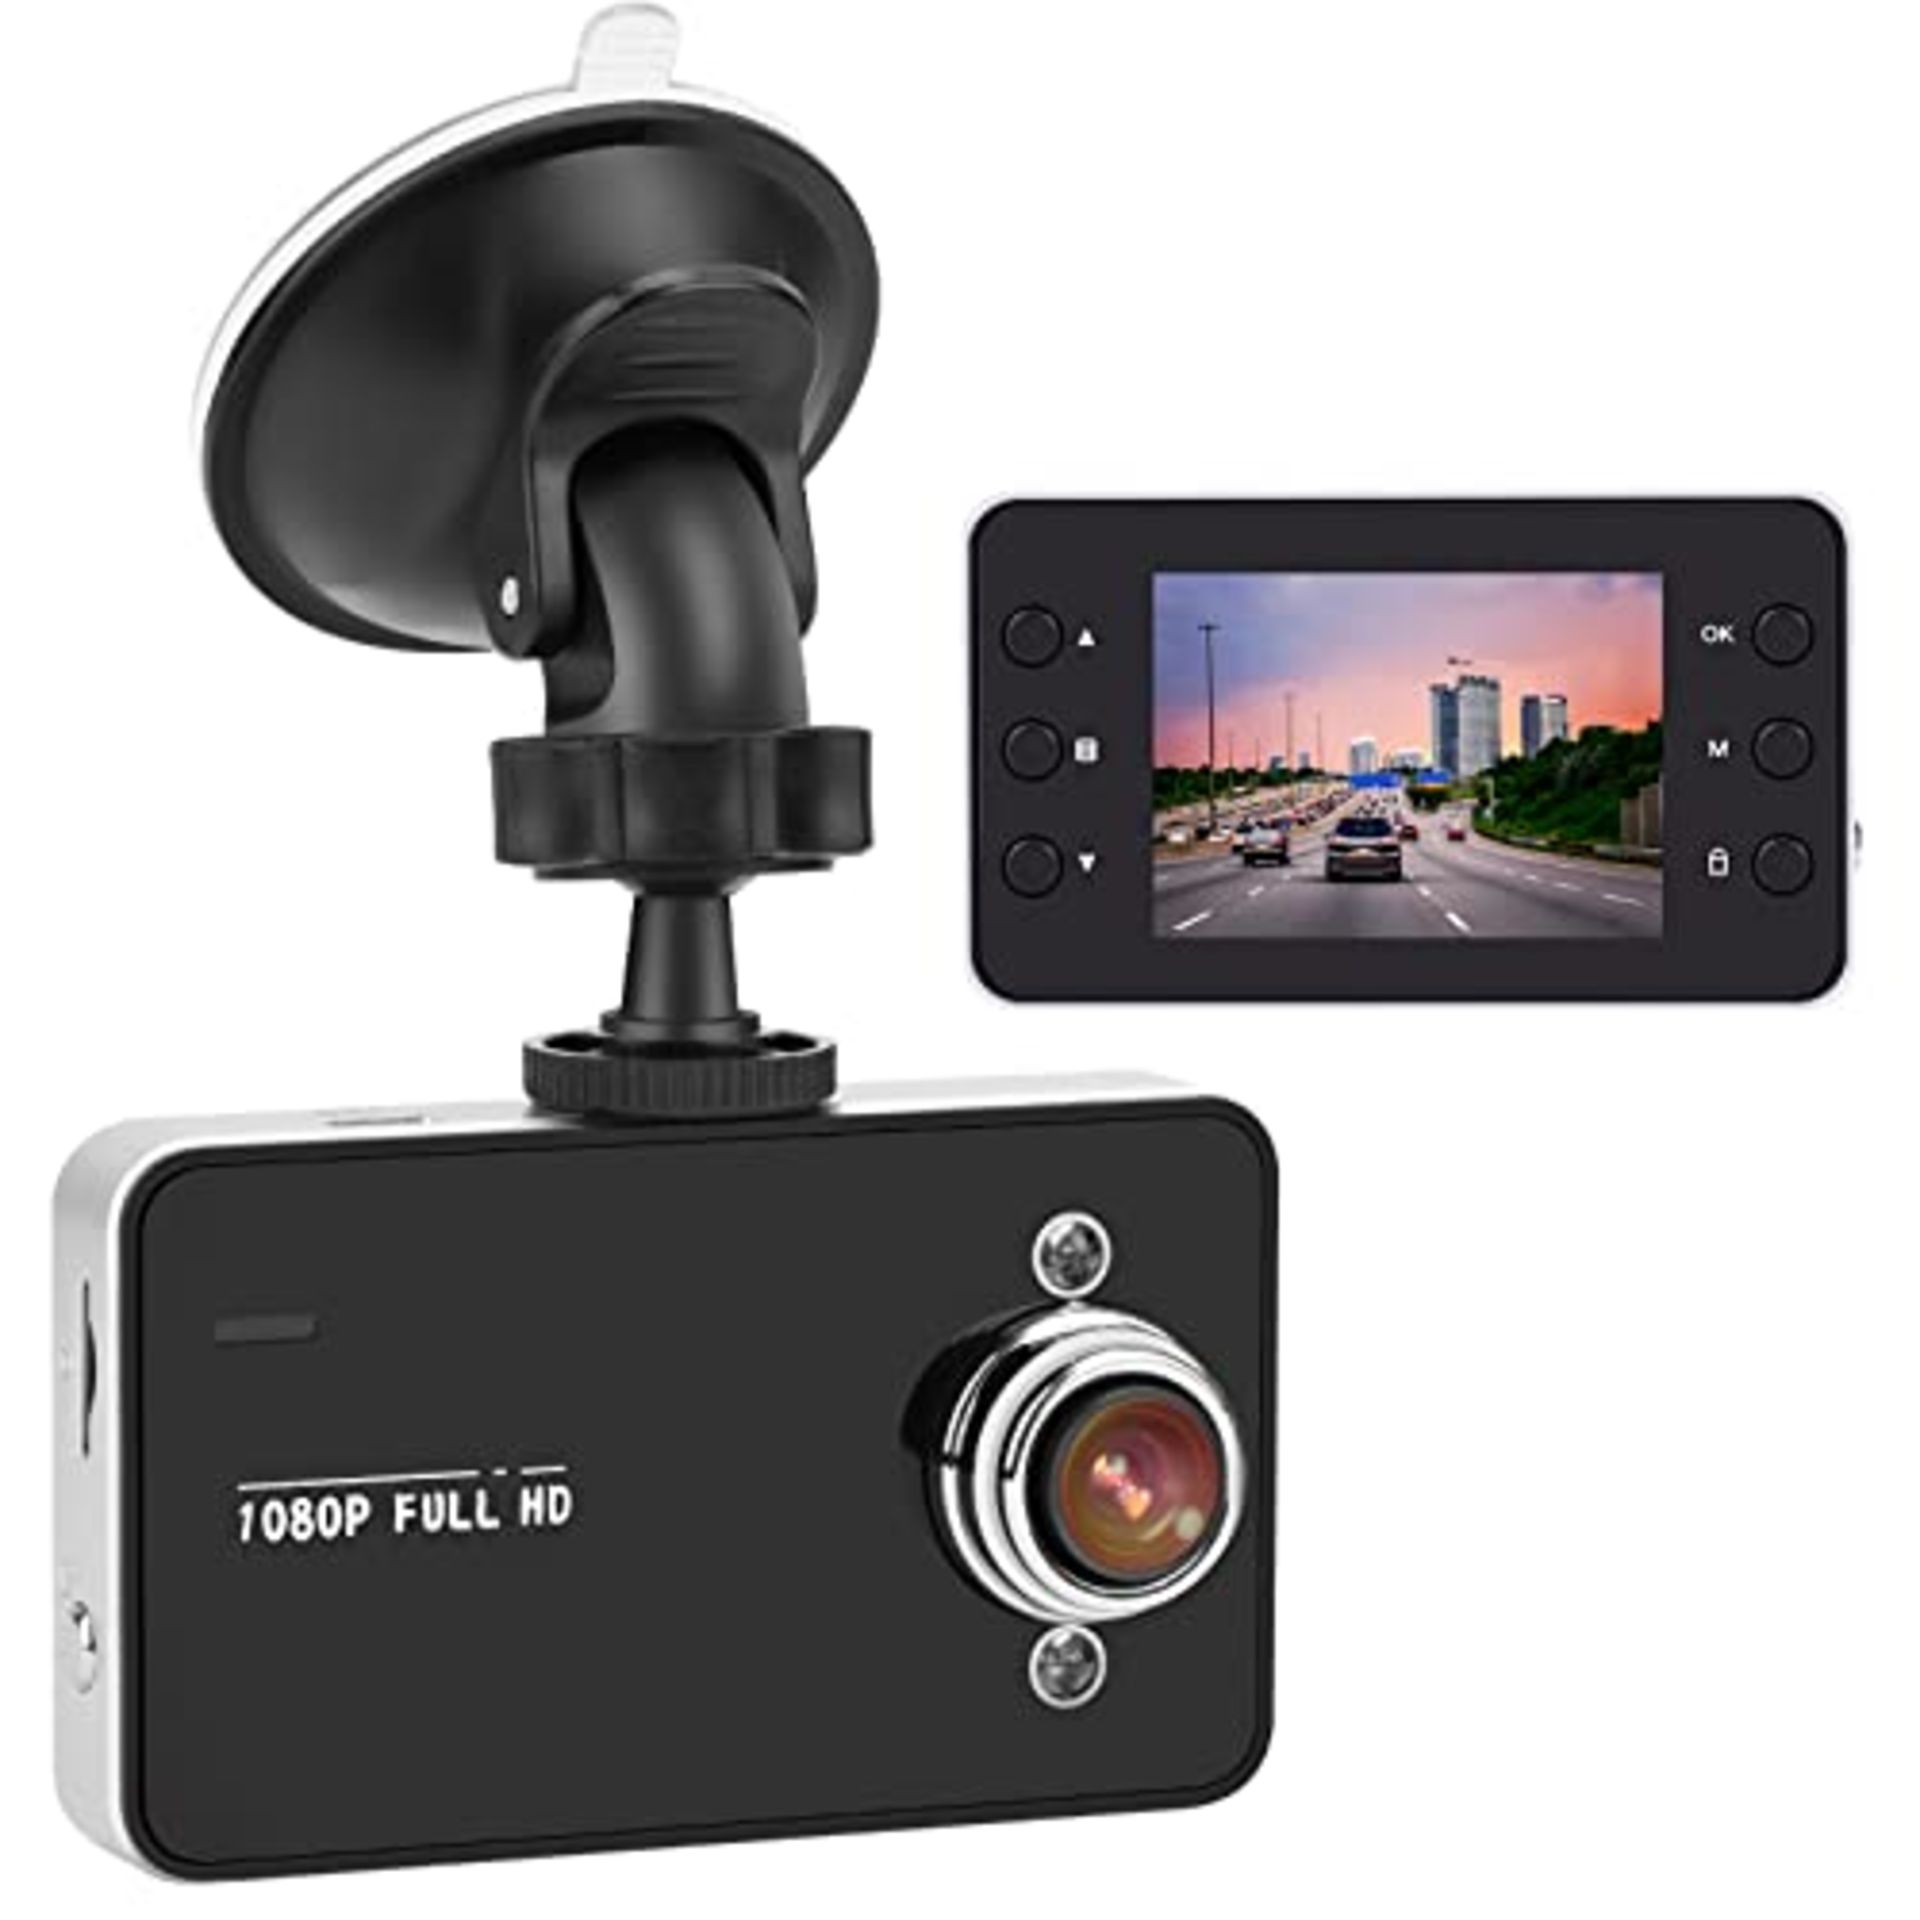 AEECLNIN Dash Cam 1080P Full HD Car Camera DVR with Night Vision and G-Sensor - Dashbo